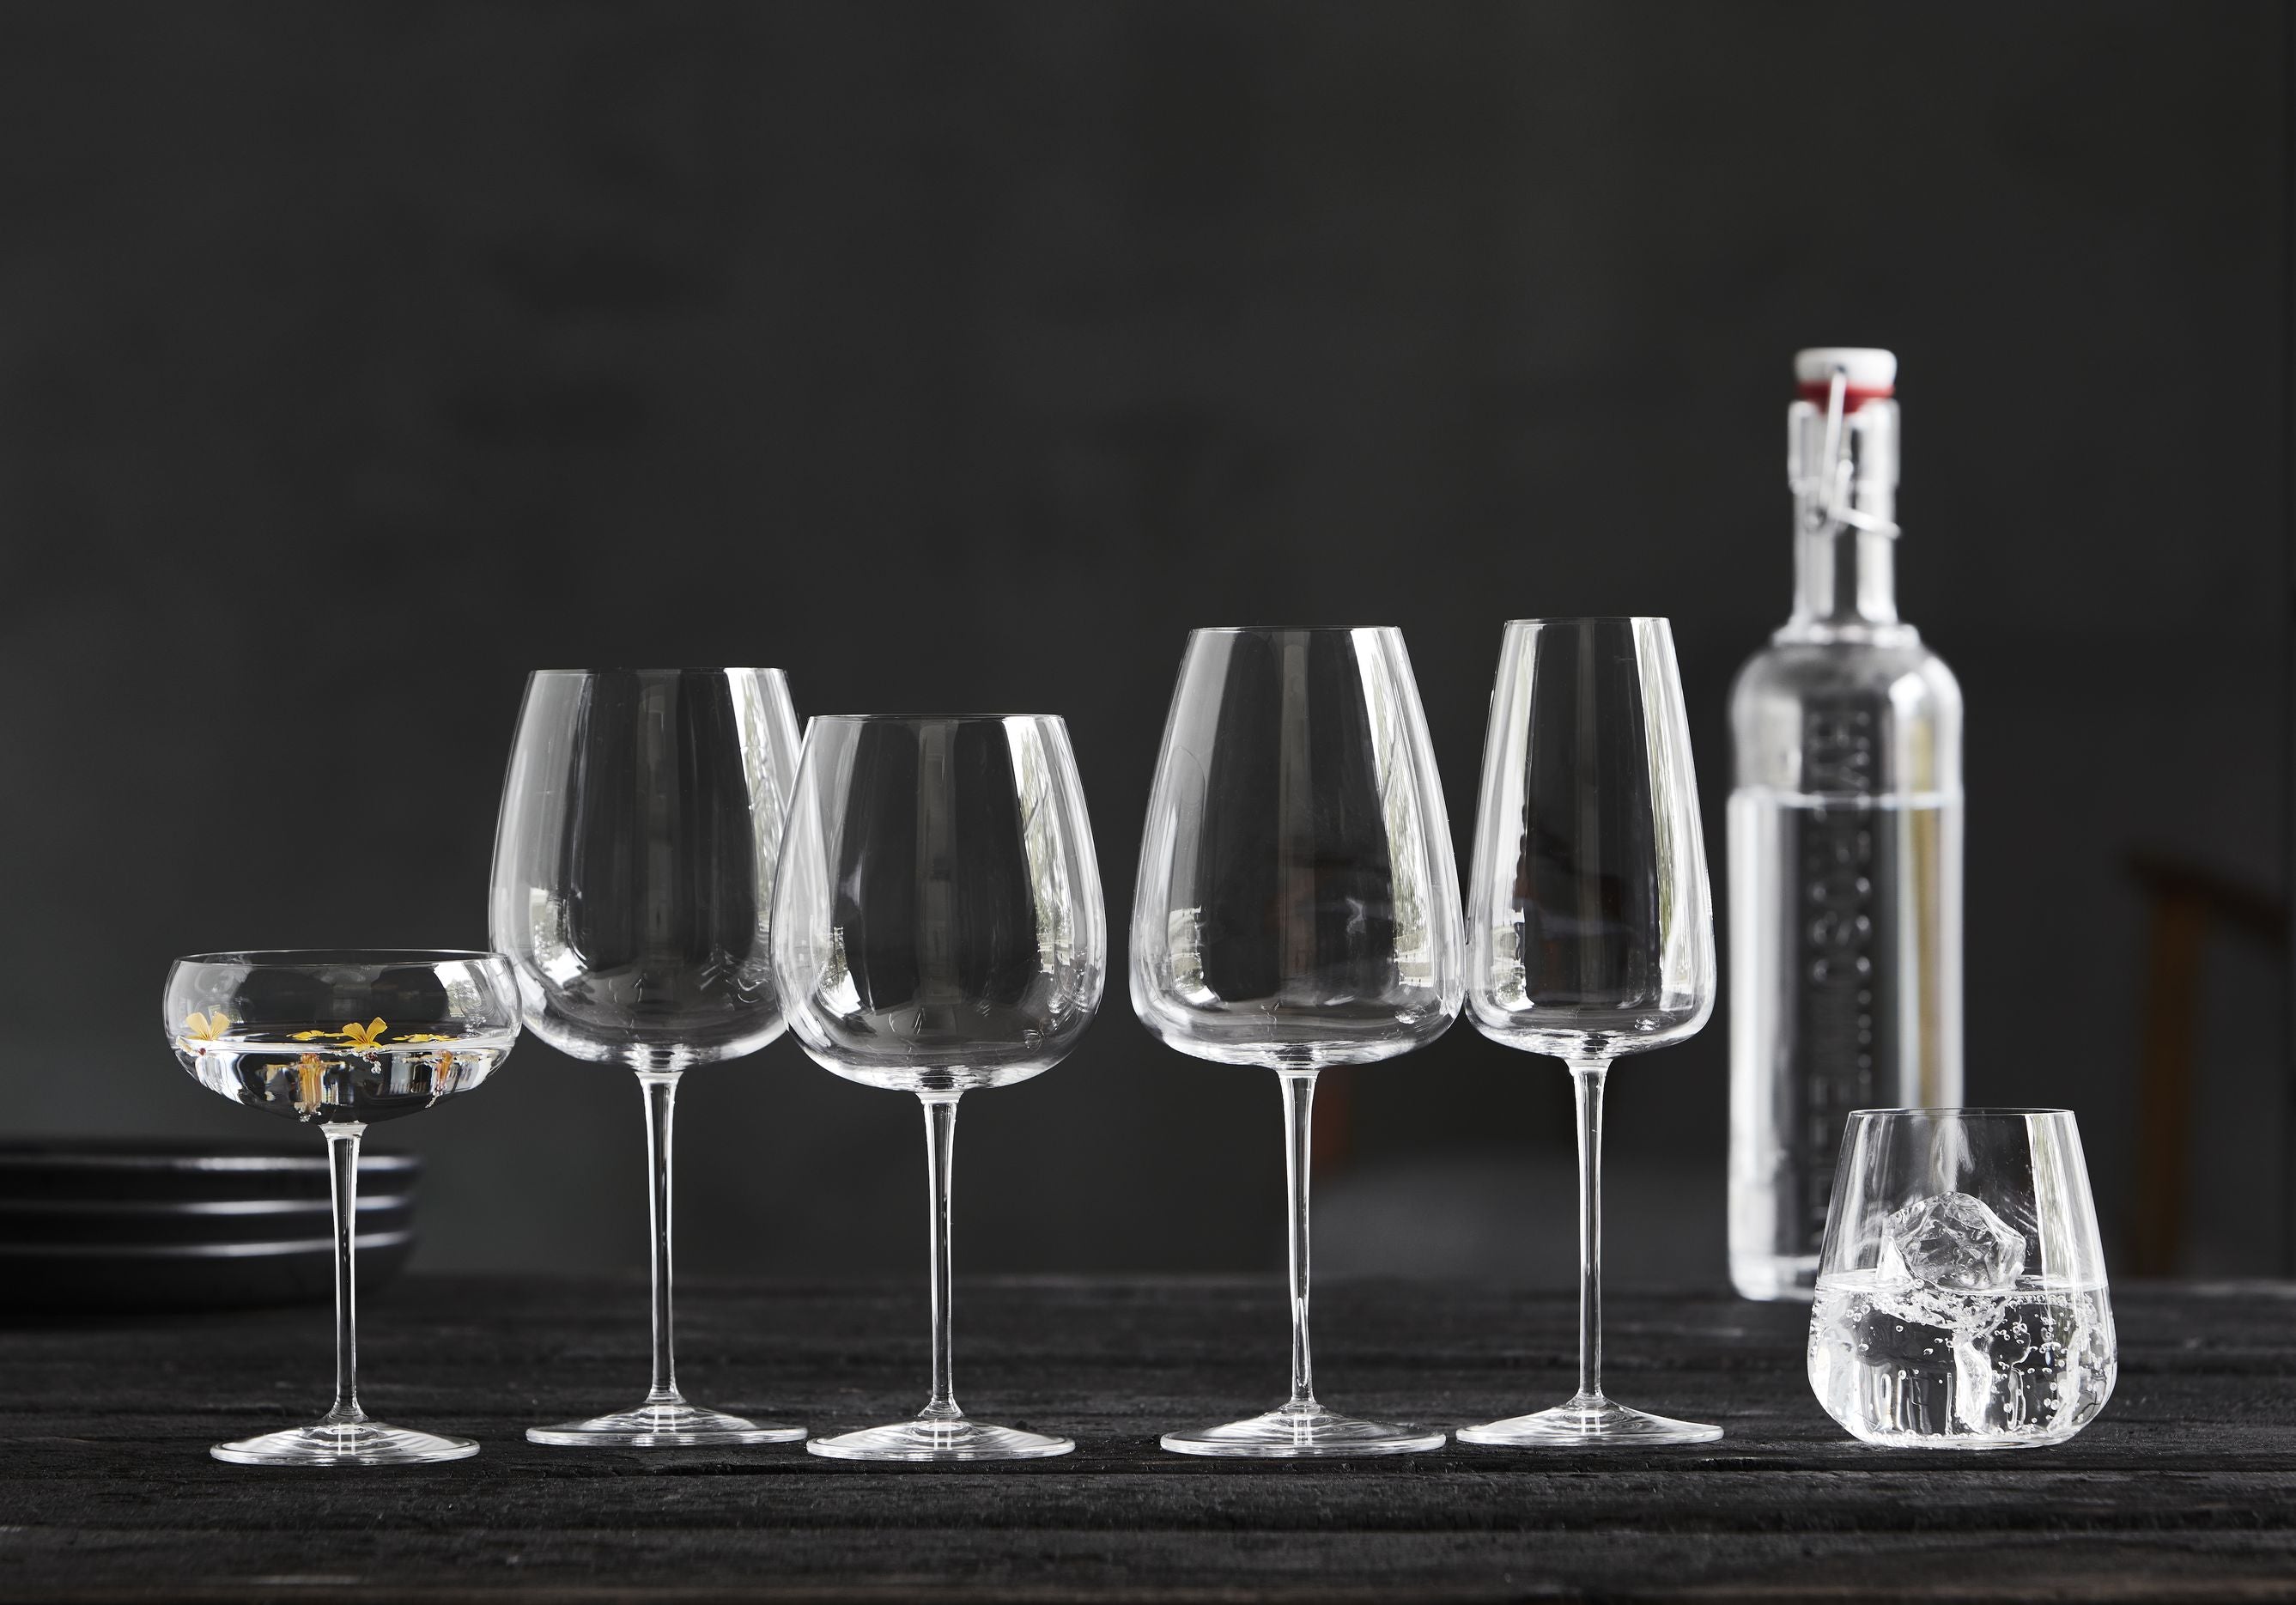 Luigi Bormioli Talismano Cocktail Glass/Martini Glass, 2 pezzi